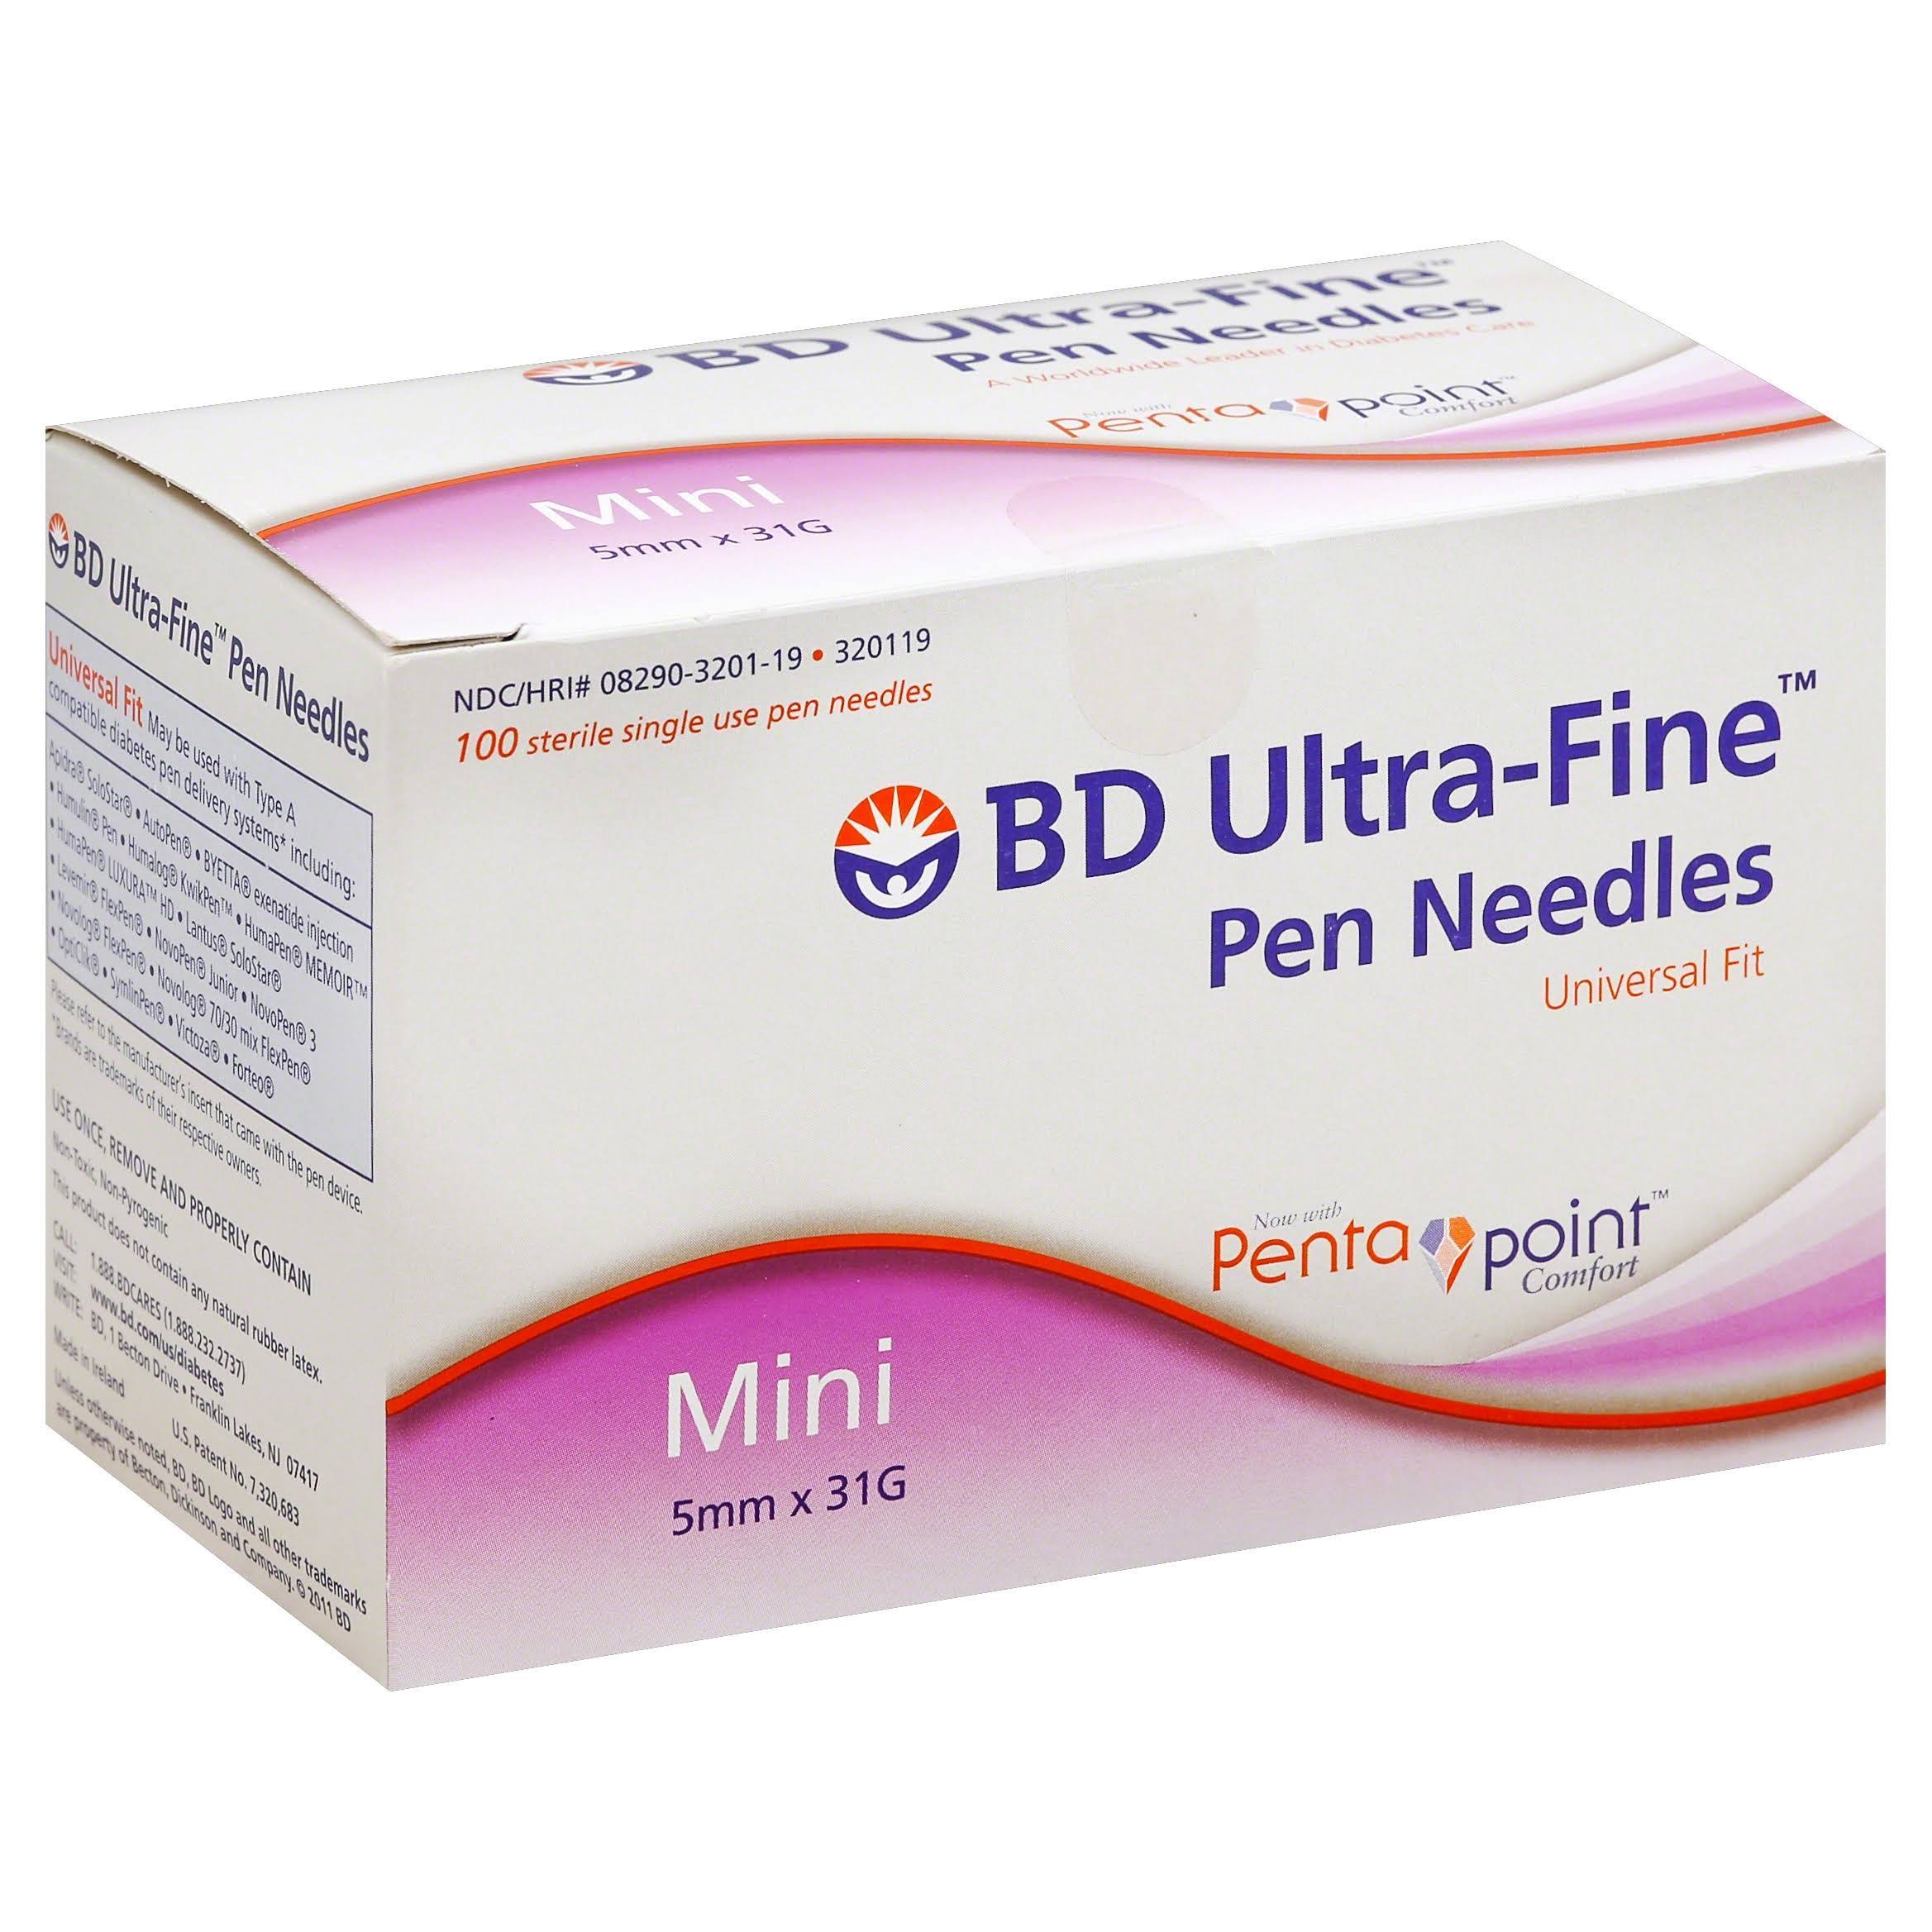 BD Ultra-Fine Pen Needles